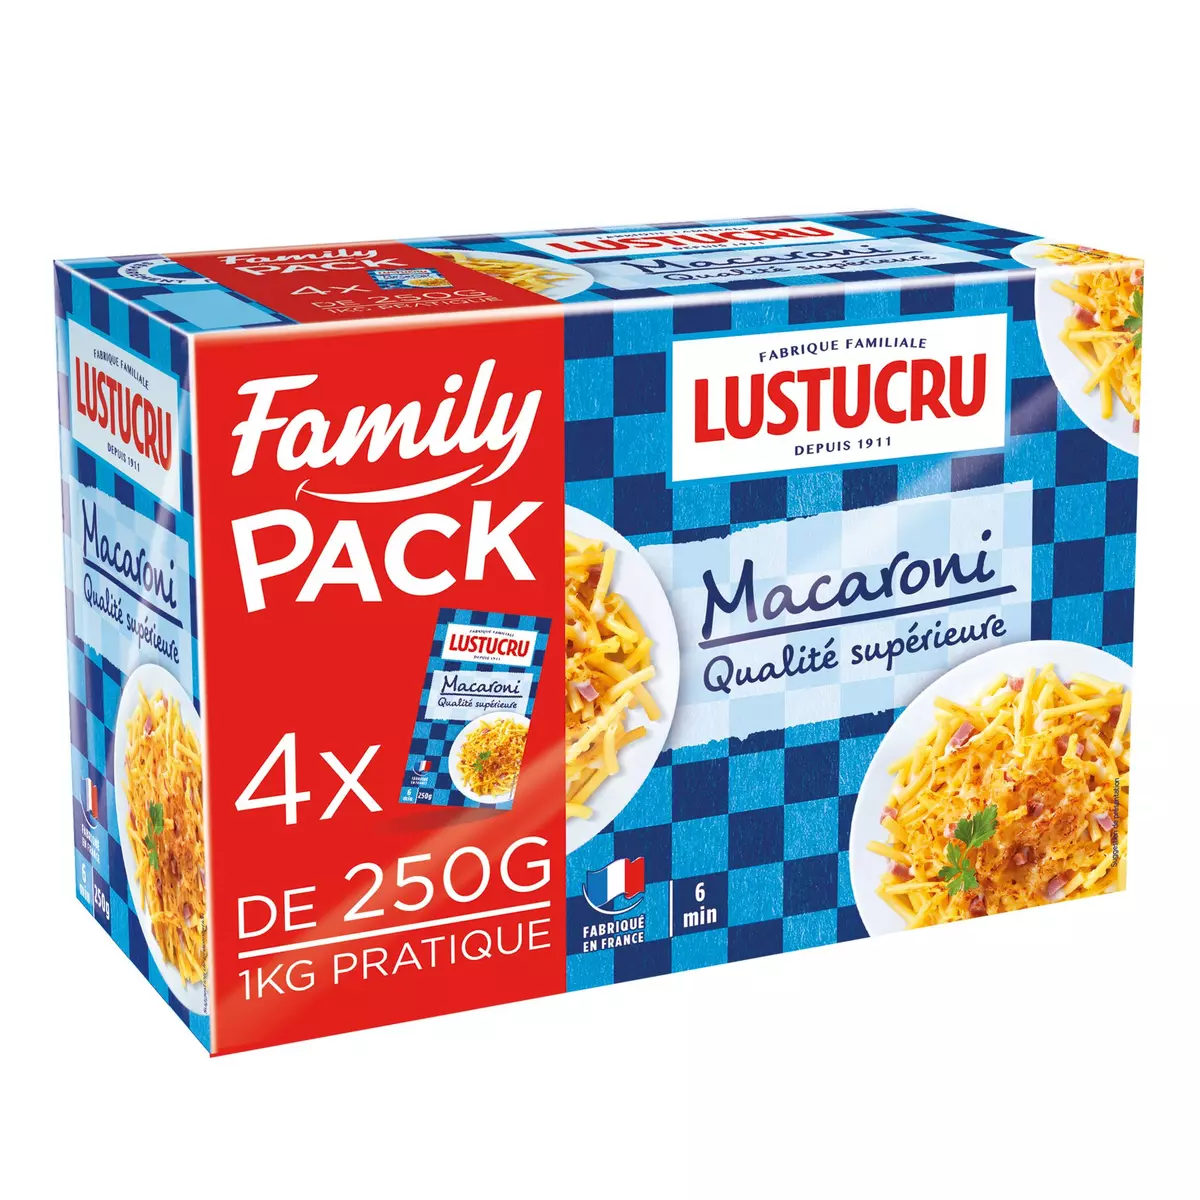 LUSTUCRU Macaroni de qualité supérieure Family pack 4x250g